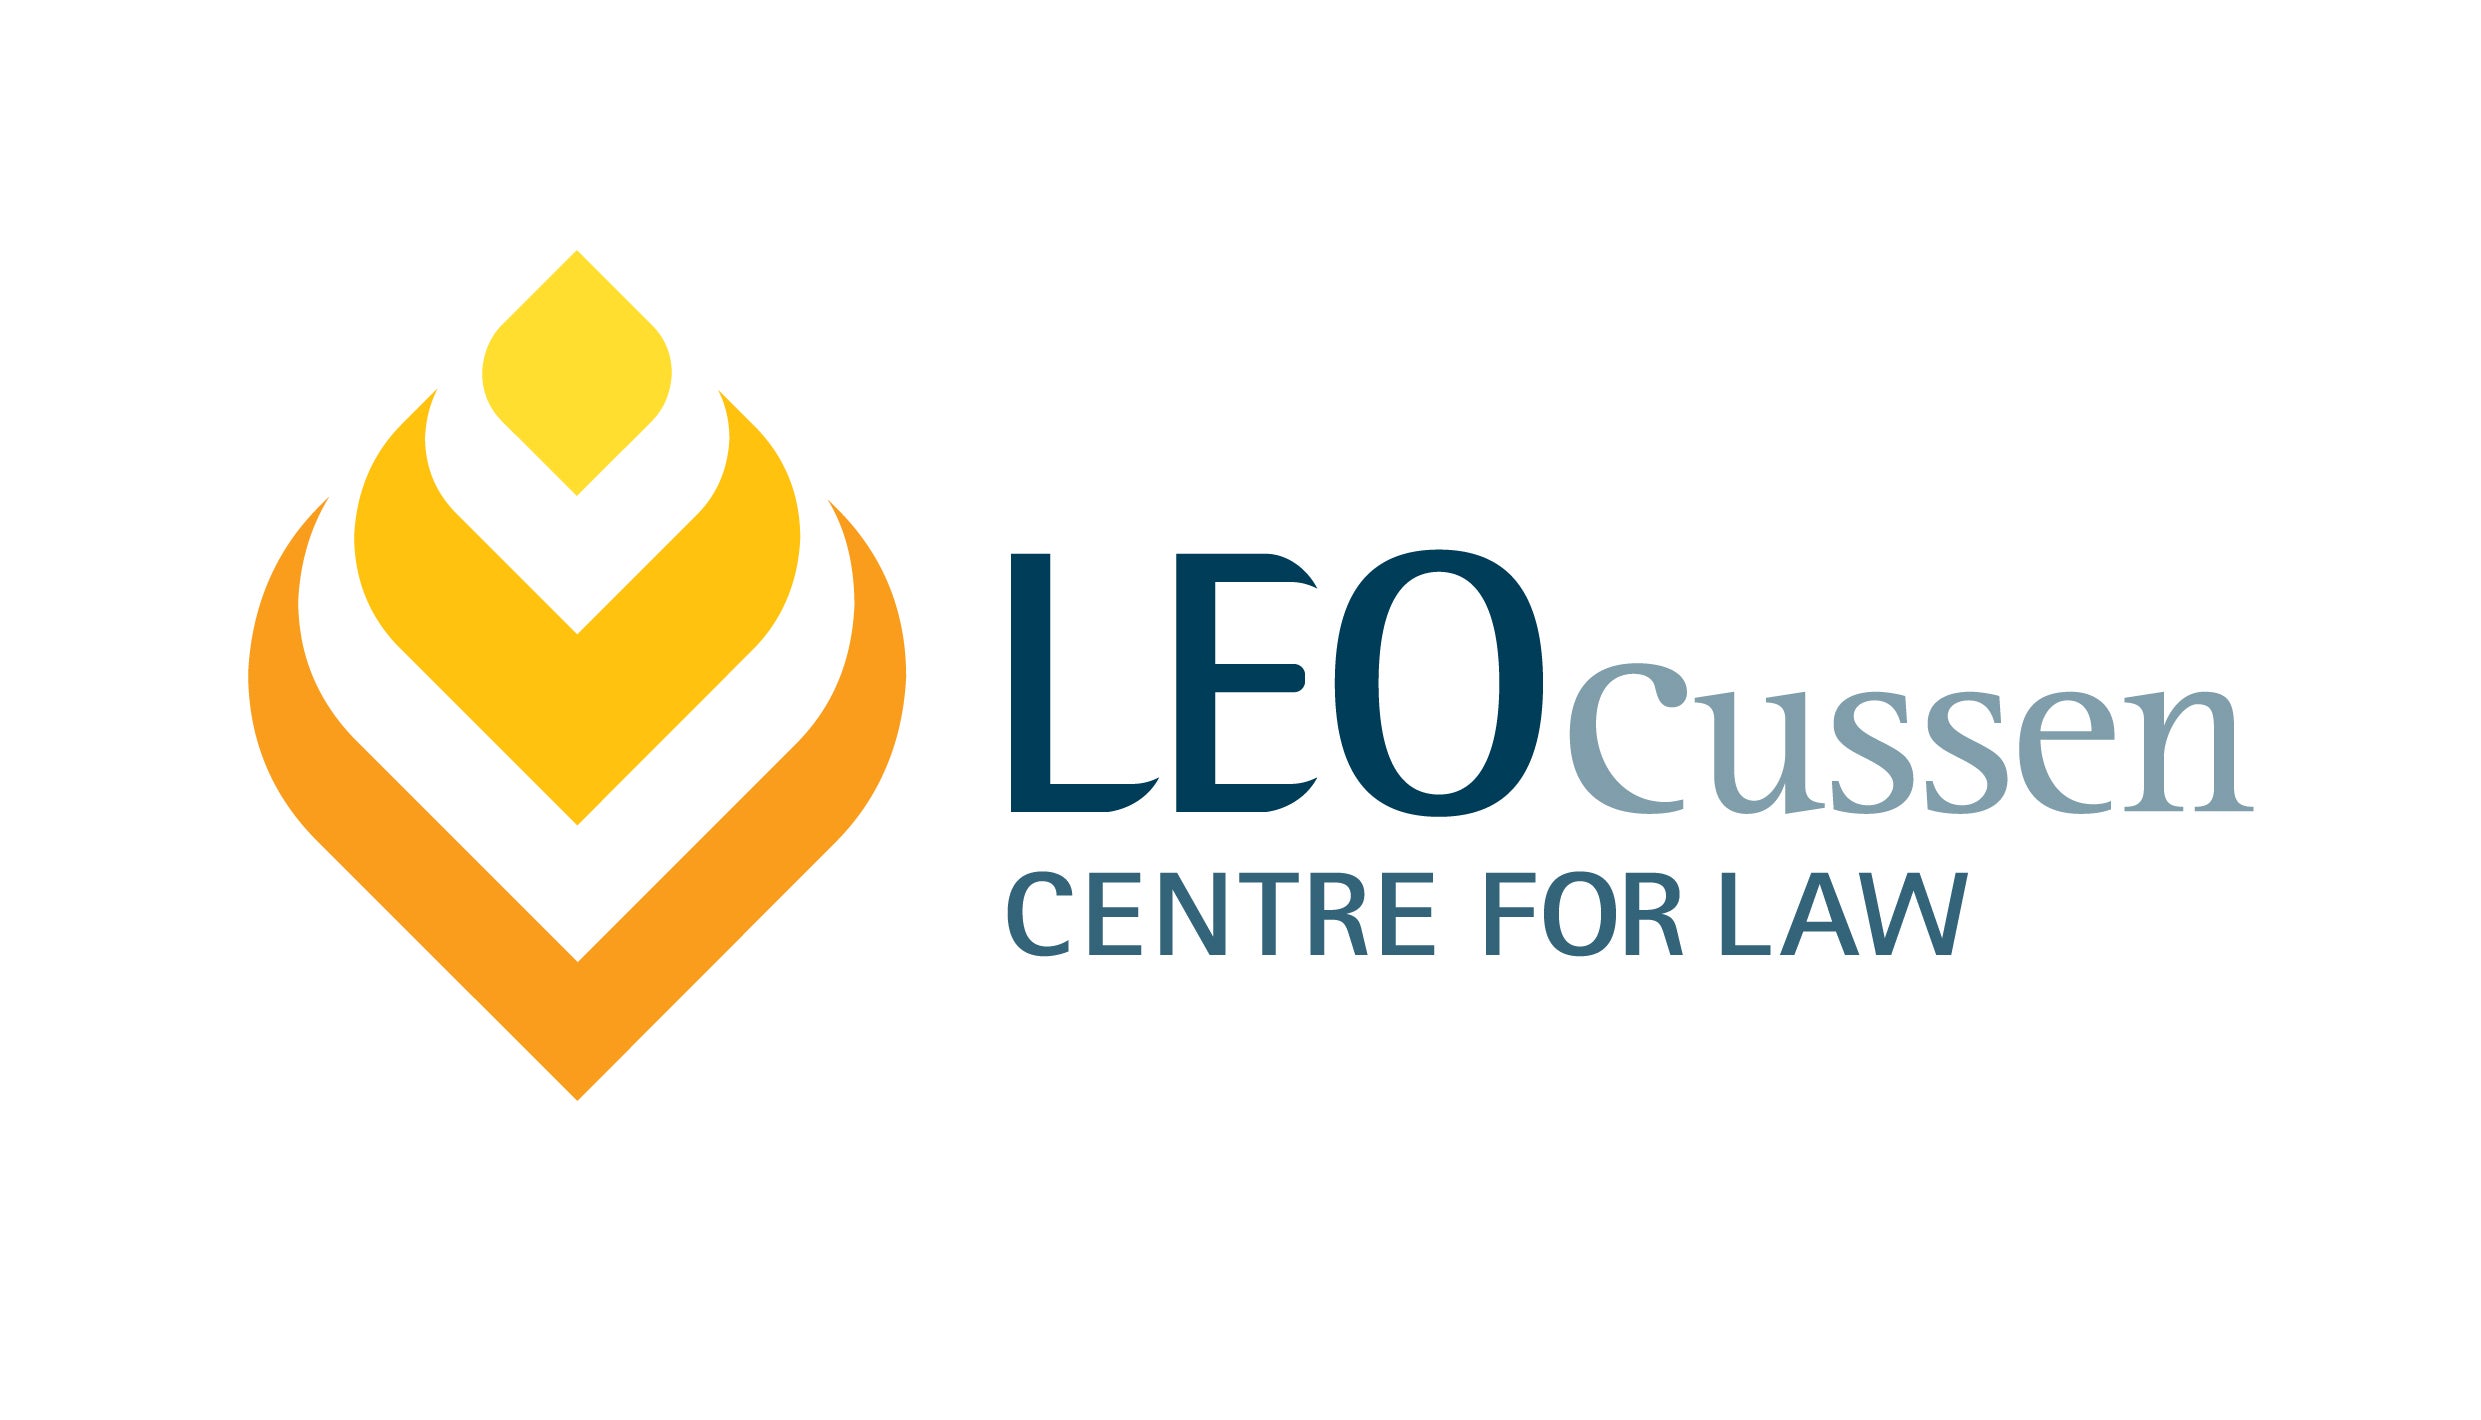 Leo Cussen Centre for Law